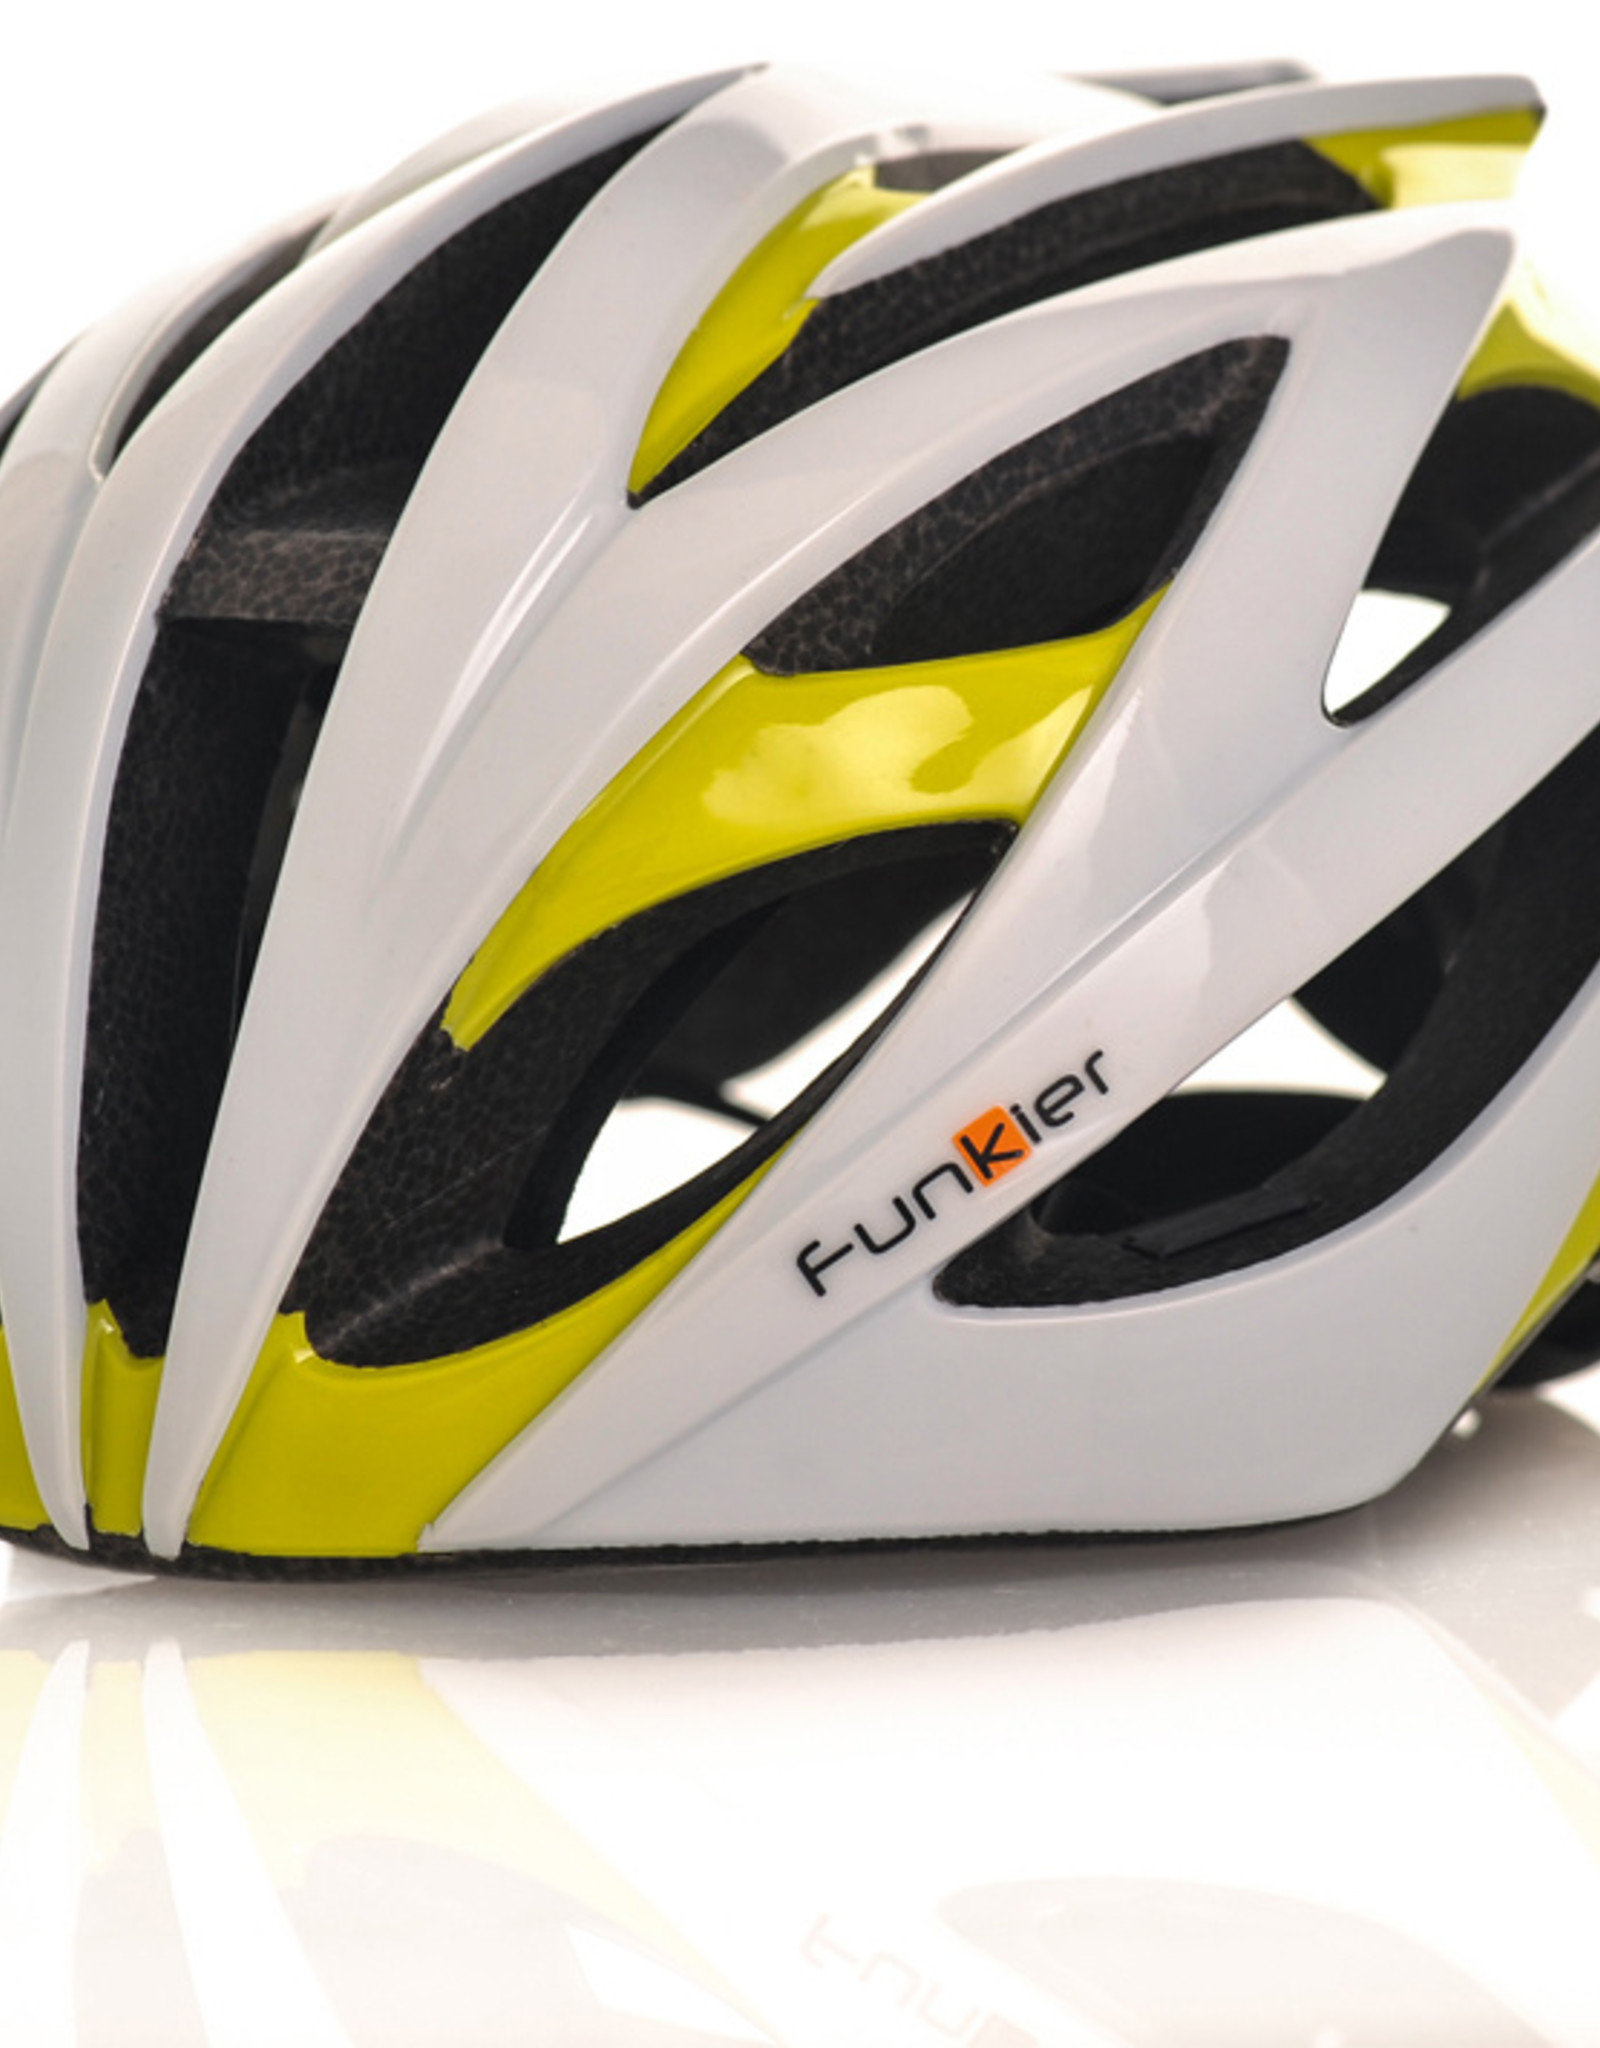 Funkier Tejat Road Elite Helmet in White/Neon